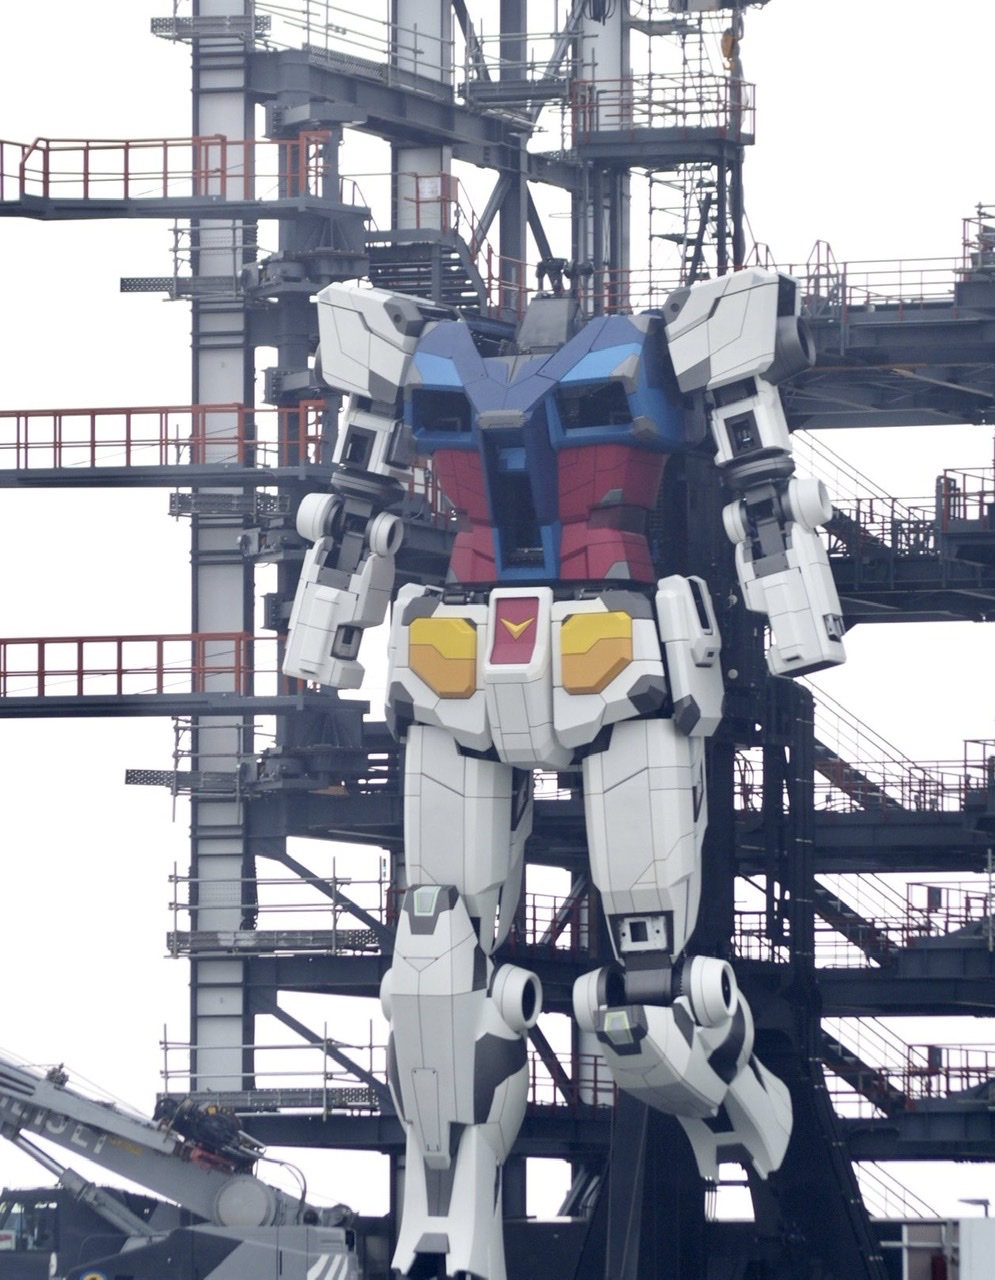 Saturday: many new images! Gundam Factory Yokohama. Gundam Global